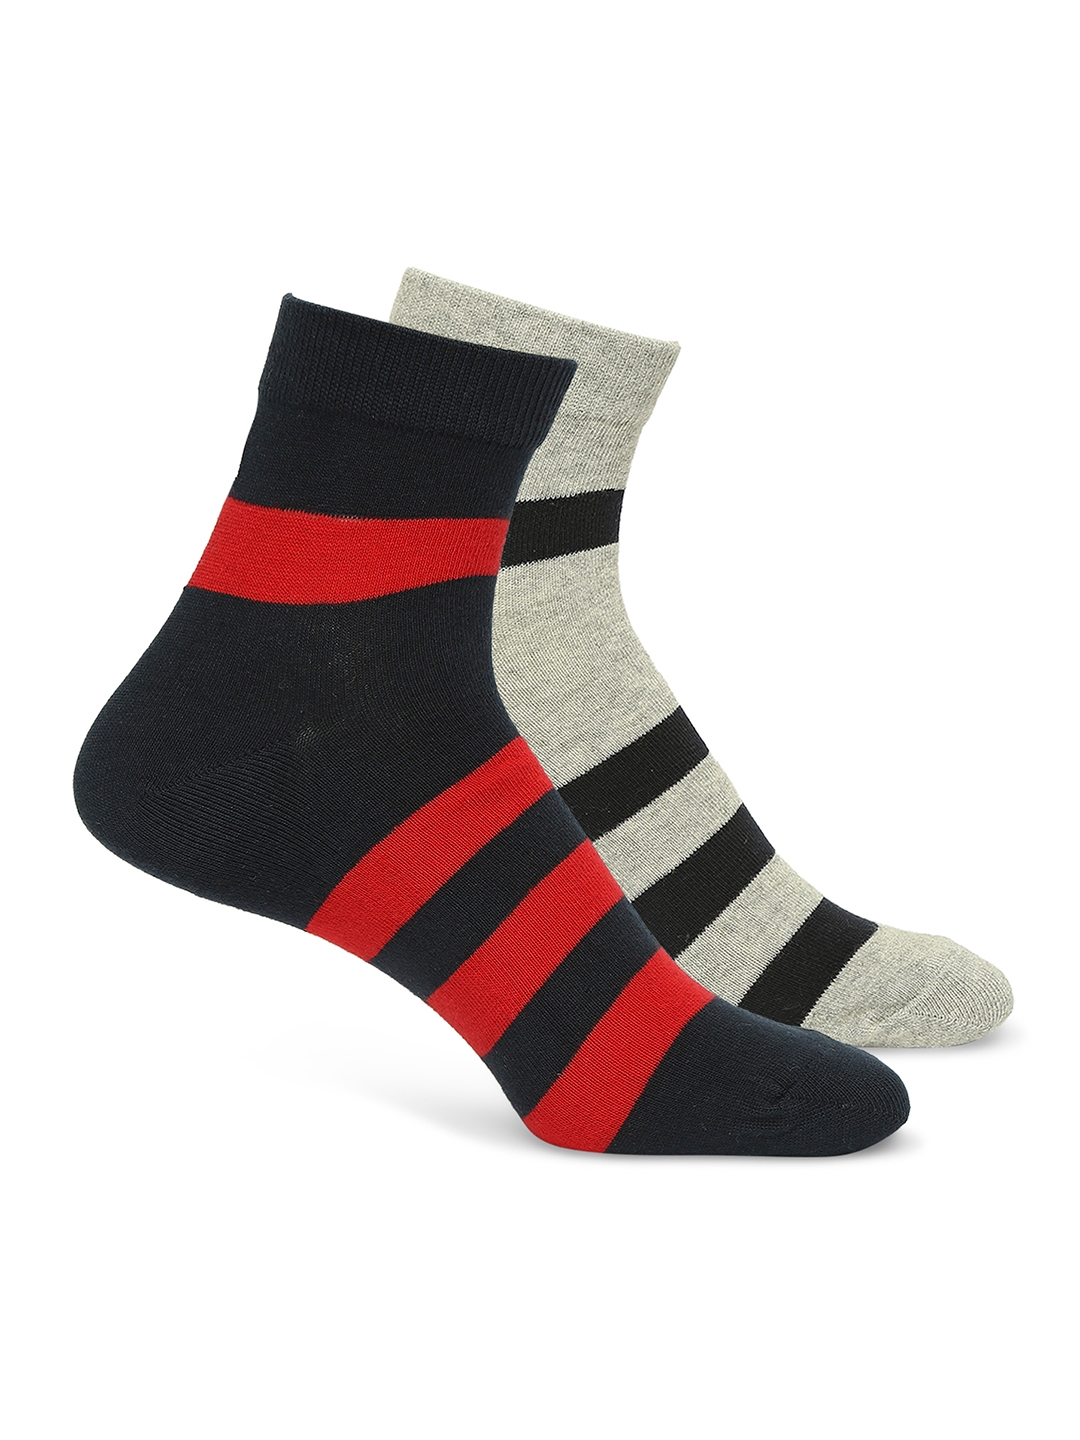 Underjeans by Spykar Premium Grey Melange & Navy Ankle Length Socks - Pack Of 2